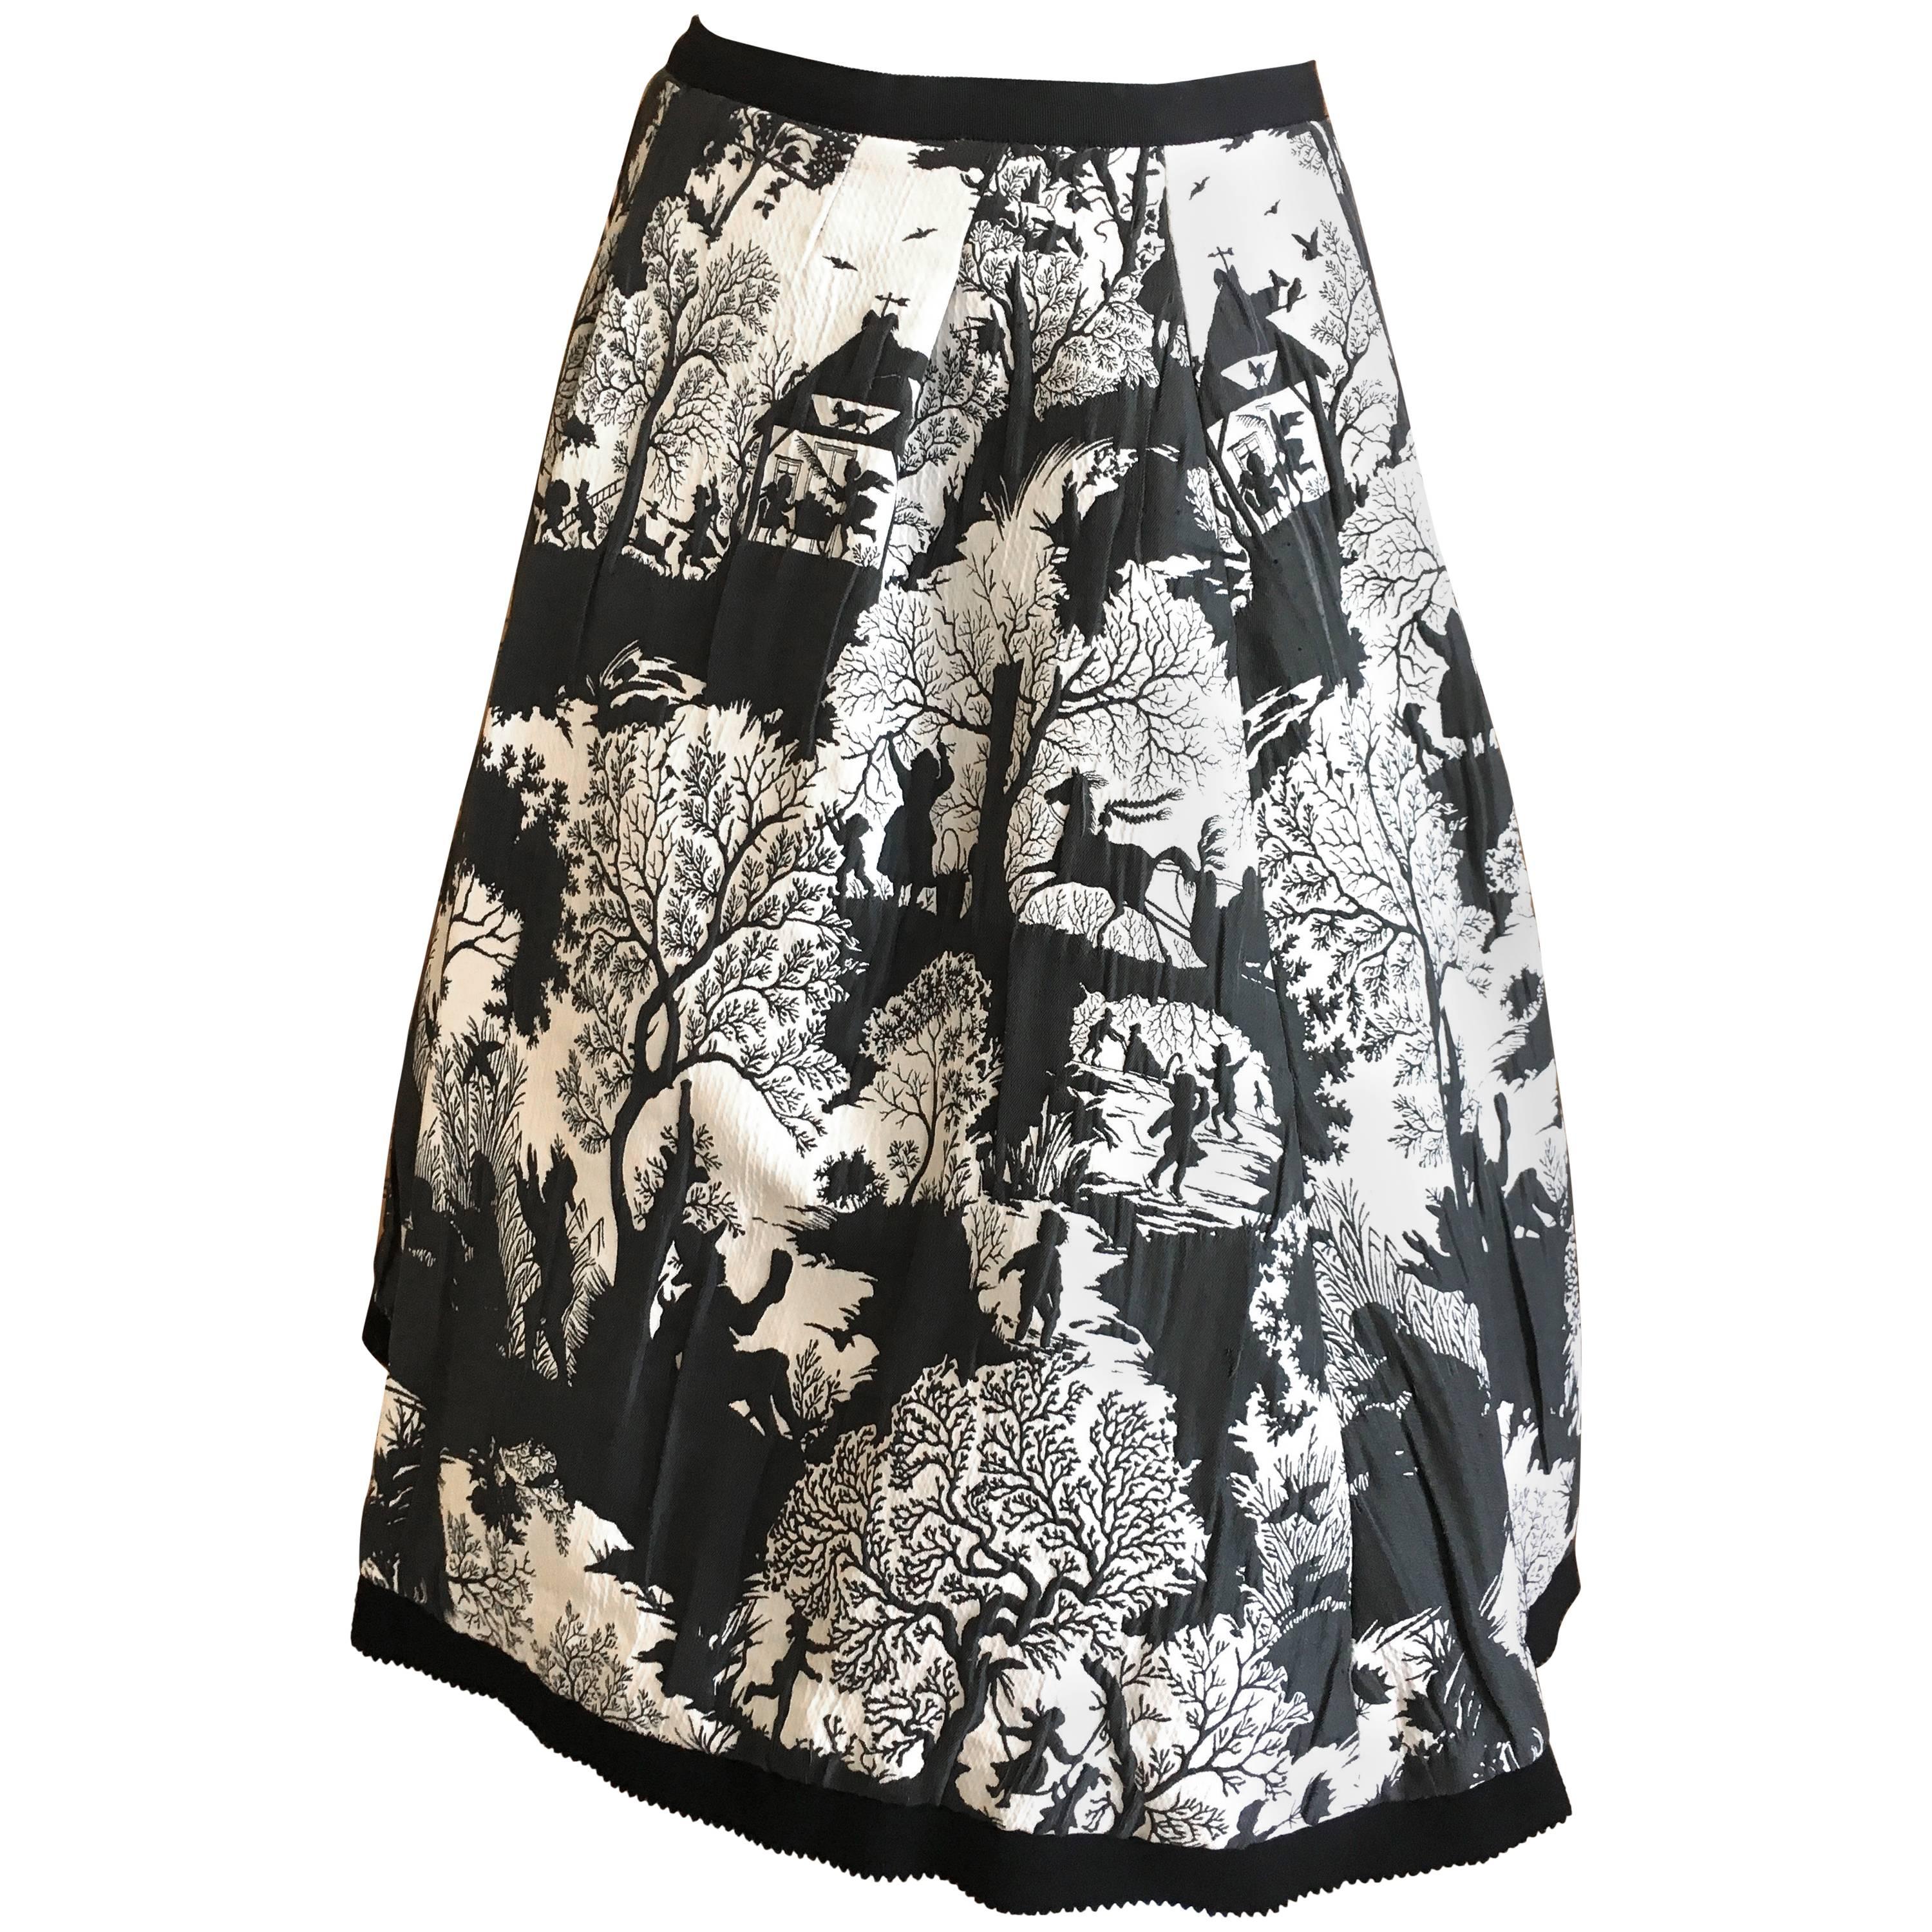 Oscar de la Renta Charming Black and White Toile de Jouy Skirt with 3 Petticoats